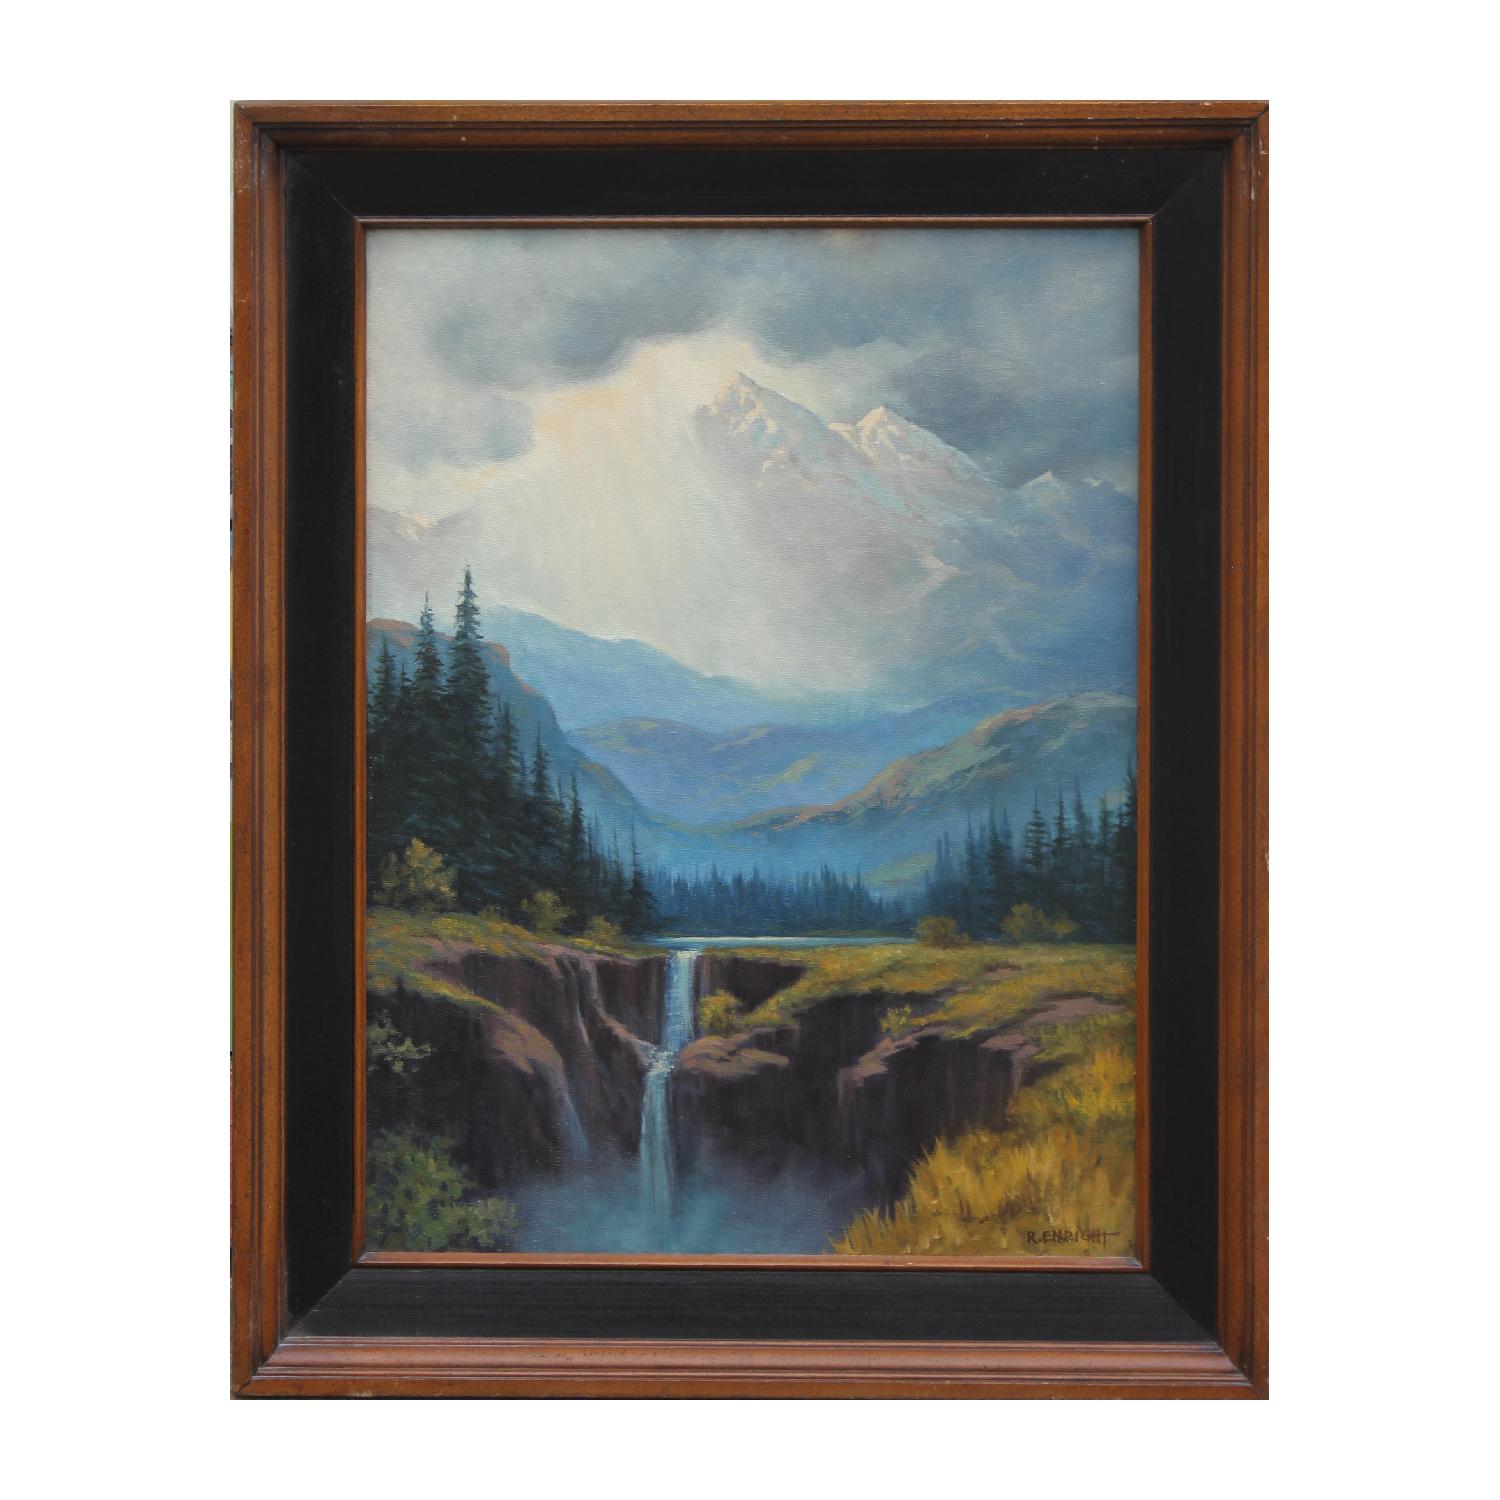 Roland D. Enright Figurative Painting - Idealized Naturalistic Mountain Landscape Painting